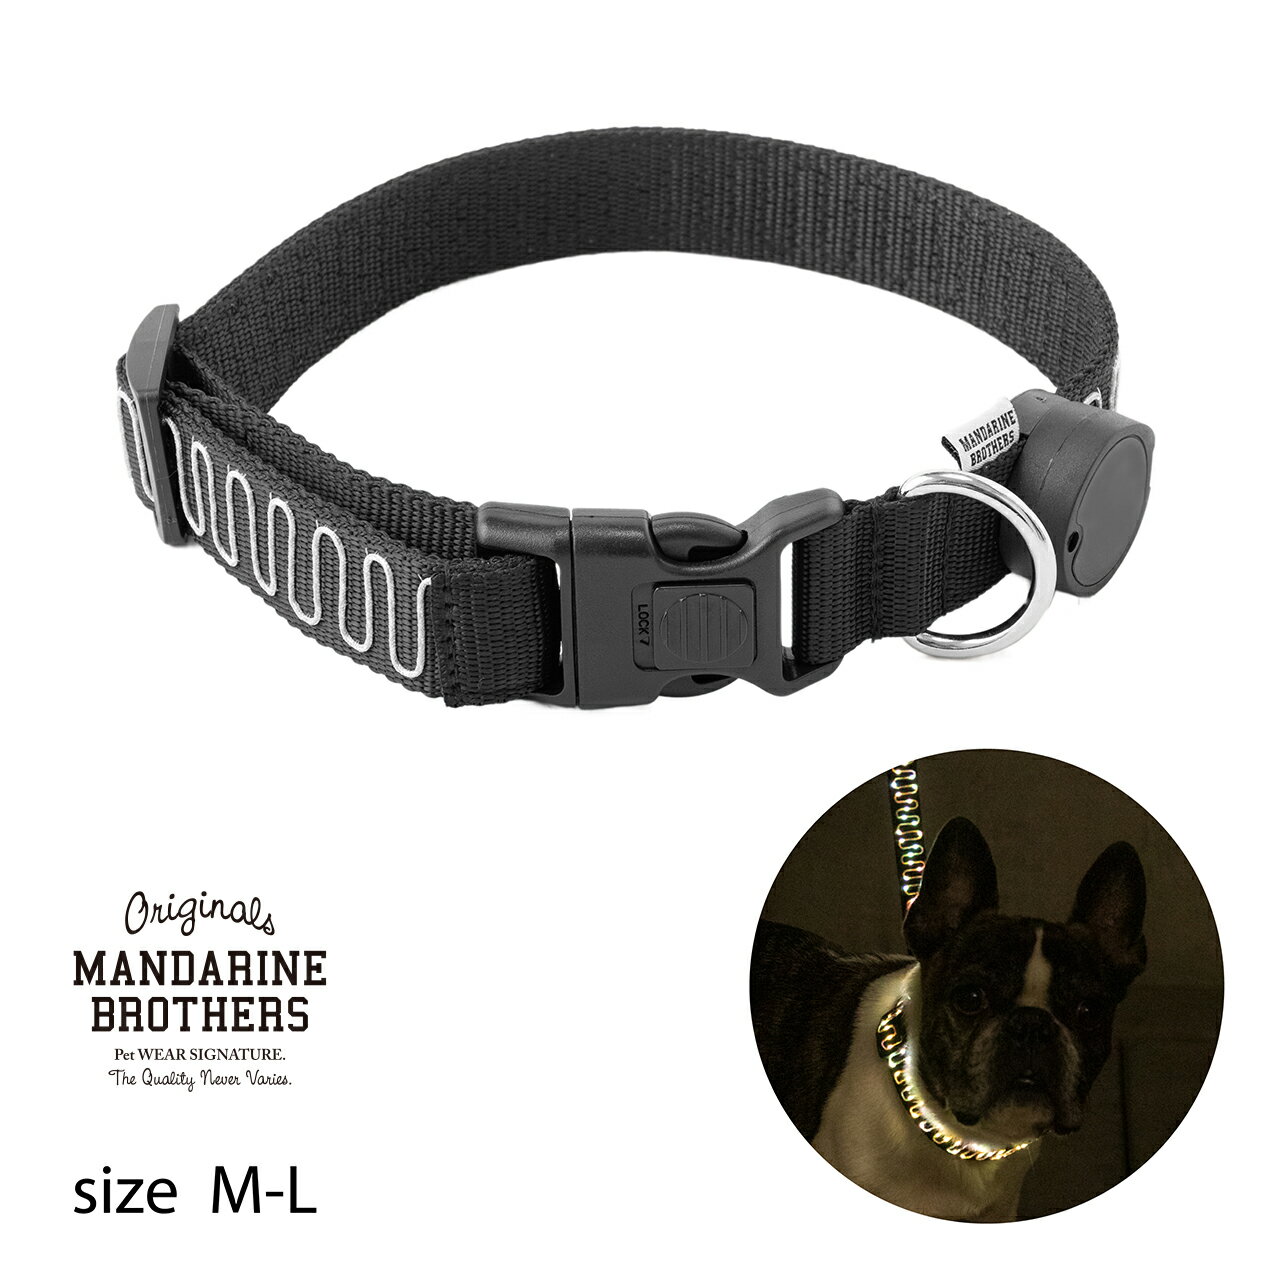 犬用 光る首輪 LED 充電式 夜散歩 犬 首輪 MANDARINE BROTHERS / NIGHTSCAPE LED COLLER M-L 